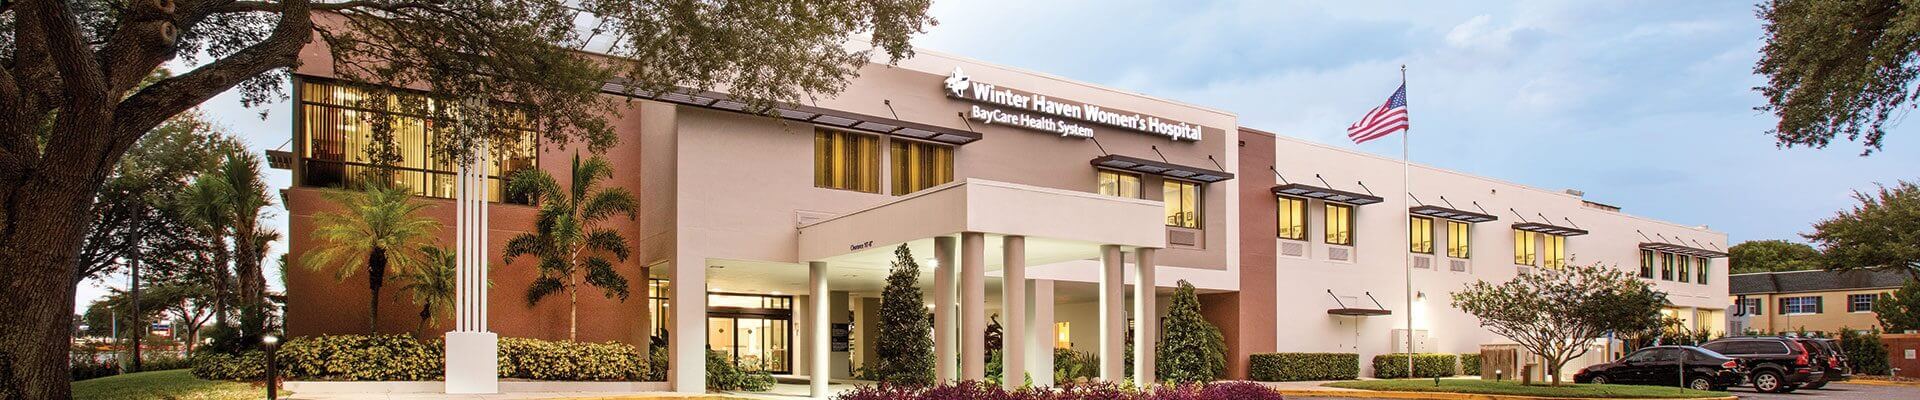 Winter Haven Women's Hospital main entrance in Winter Haven